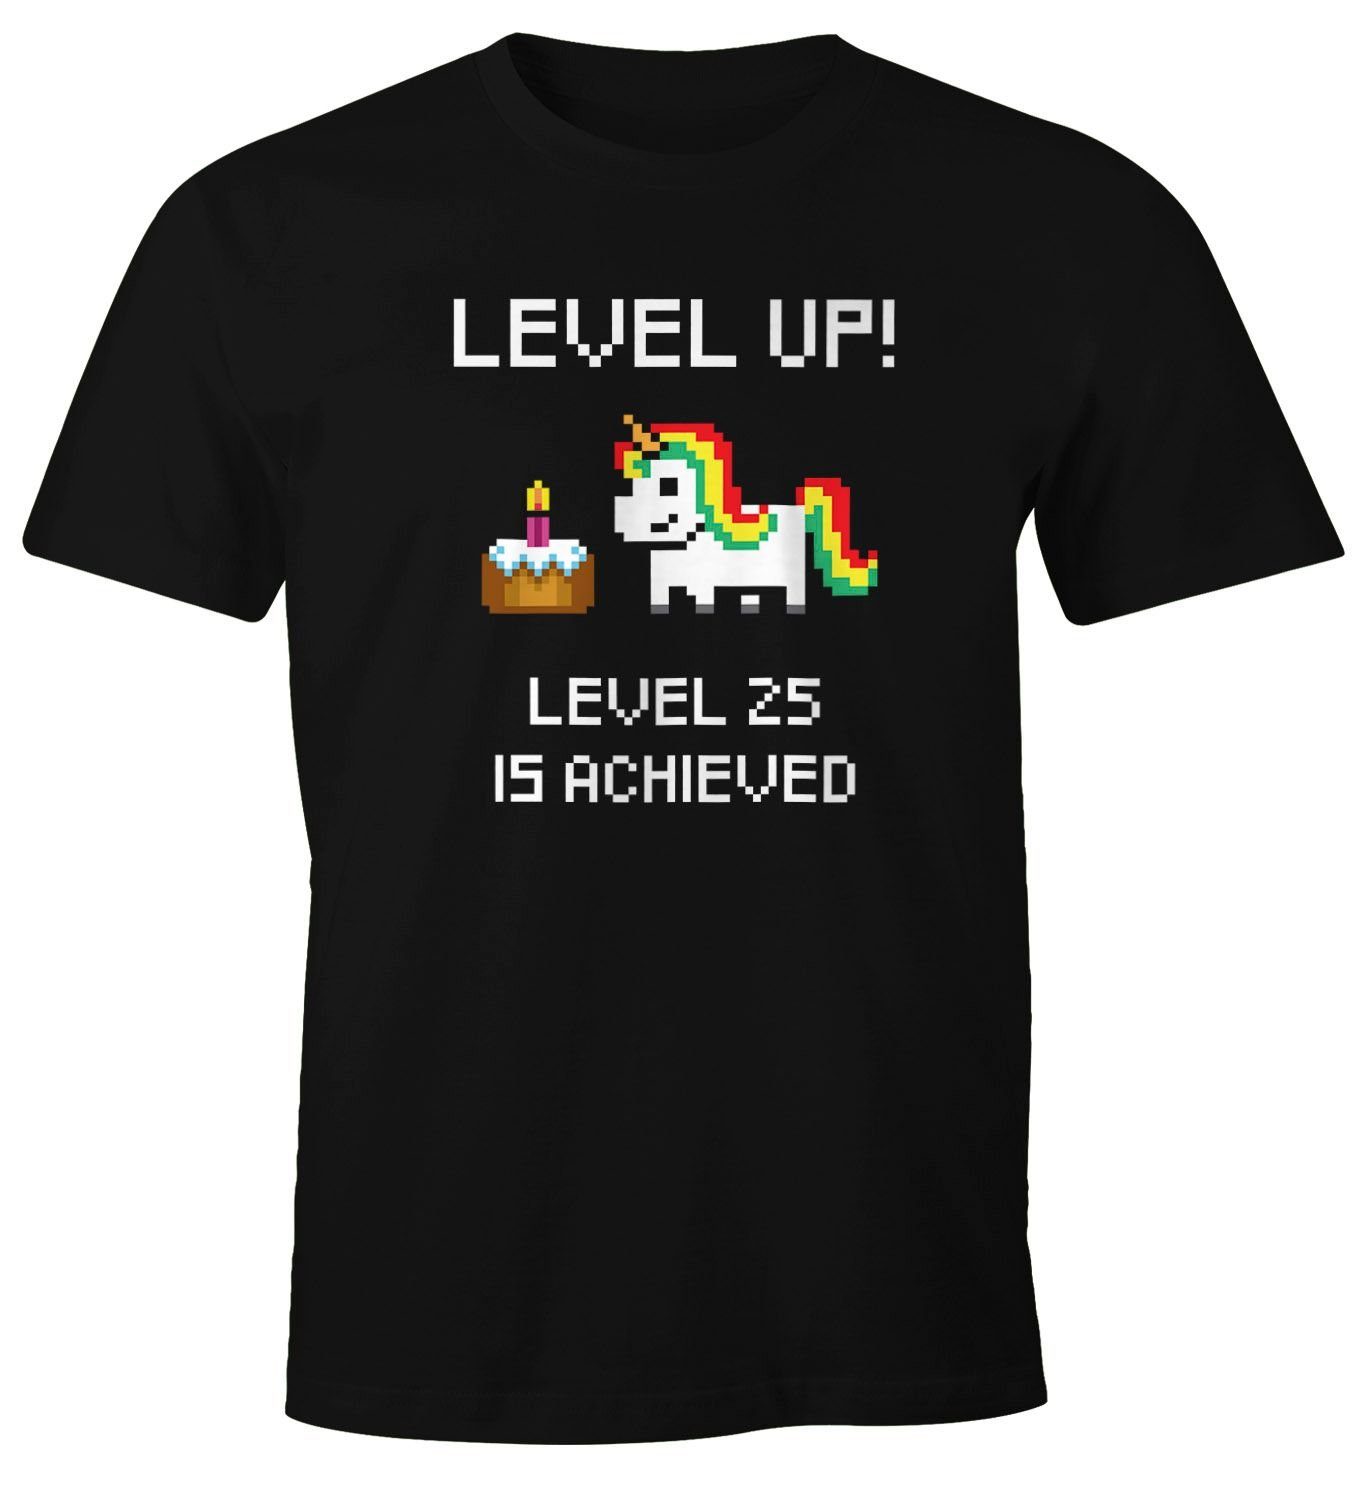 MoonWorks Print-Shirt Herren T-Shirt Geburtstag Level Up Pixel-Einhorn Torte Retro Gamer Pixelgrafik Geschenk Arcade Fun-Shirt Moonworks® mit Print 25 schwarz